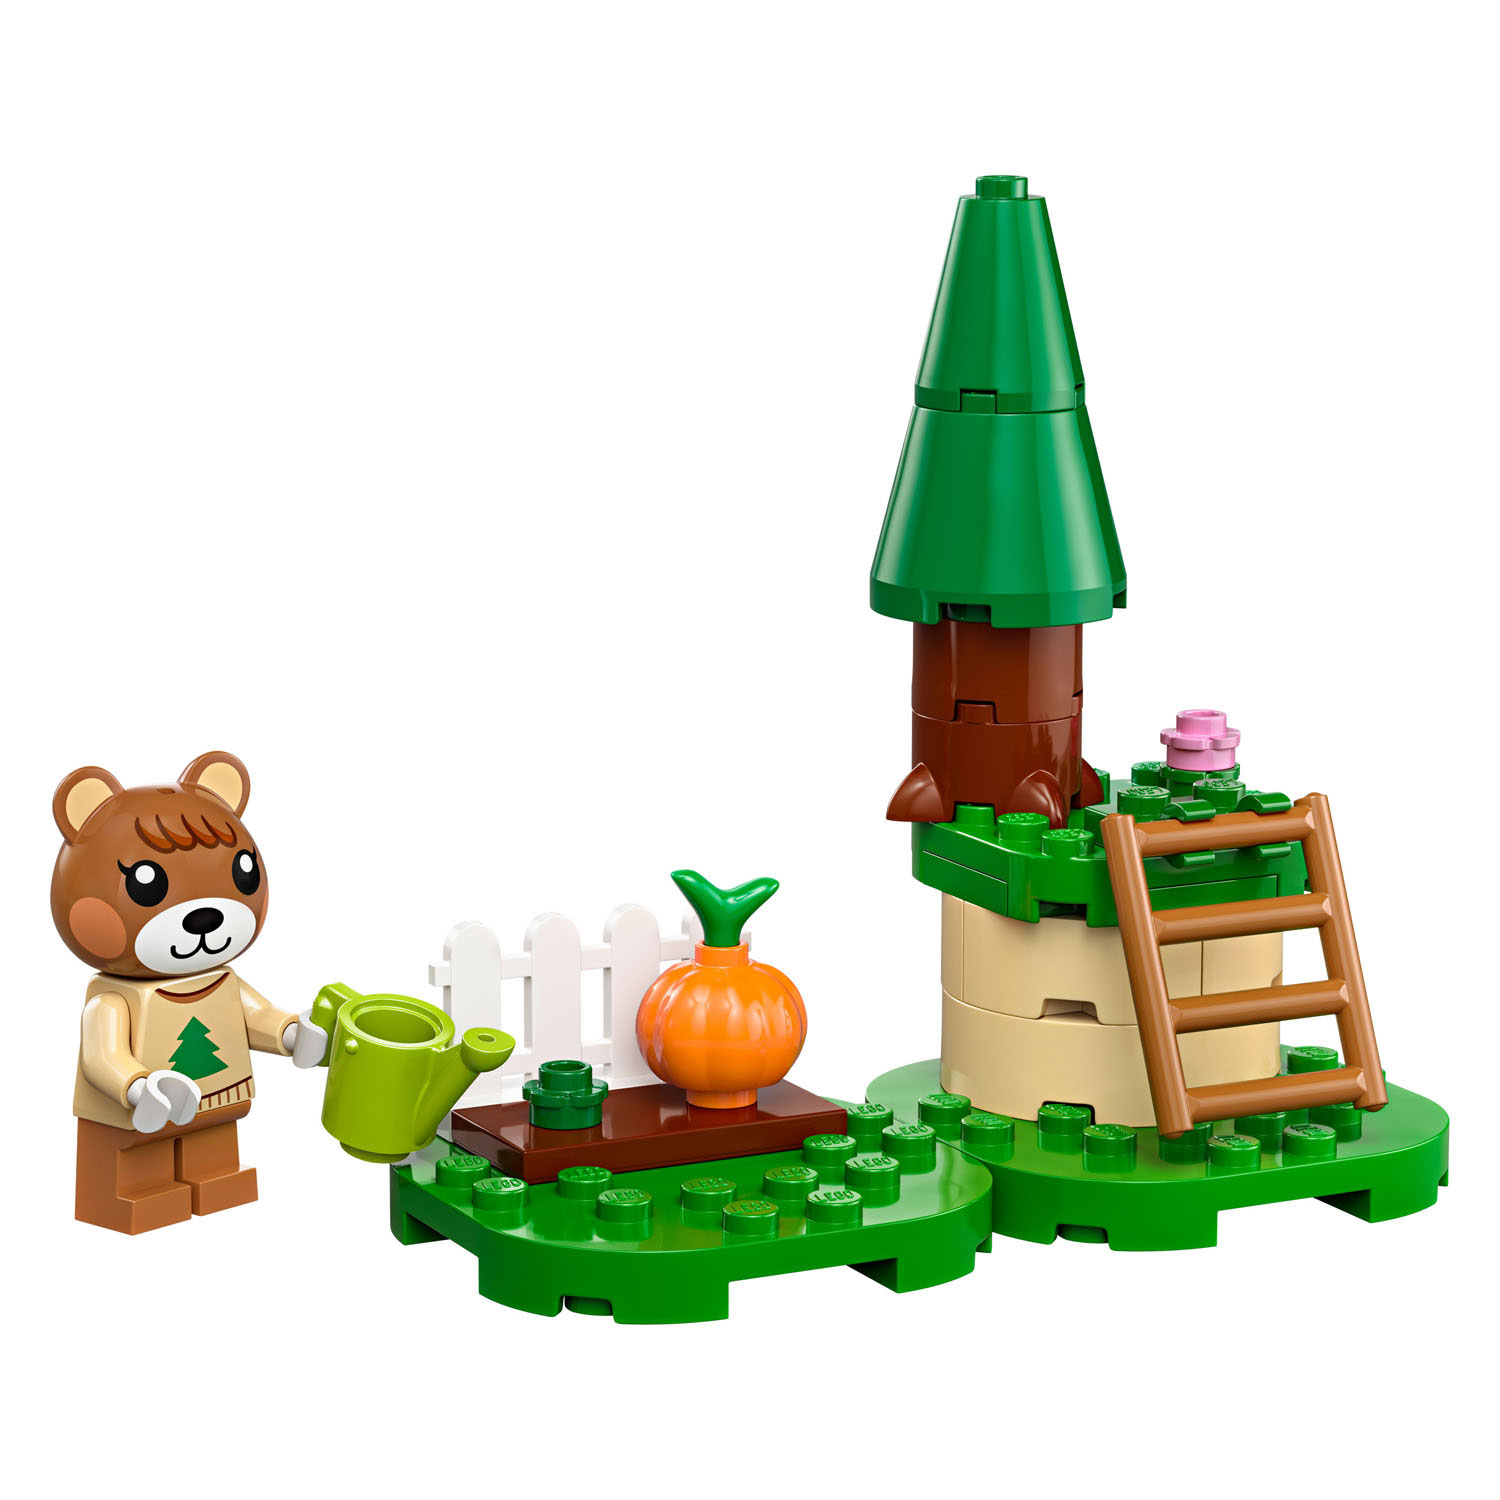 LEGO Animal Crossing 30662 Maples Kürbisgarten